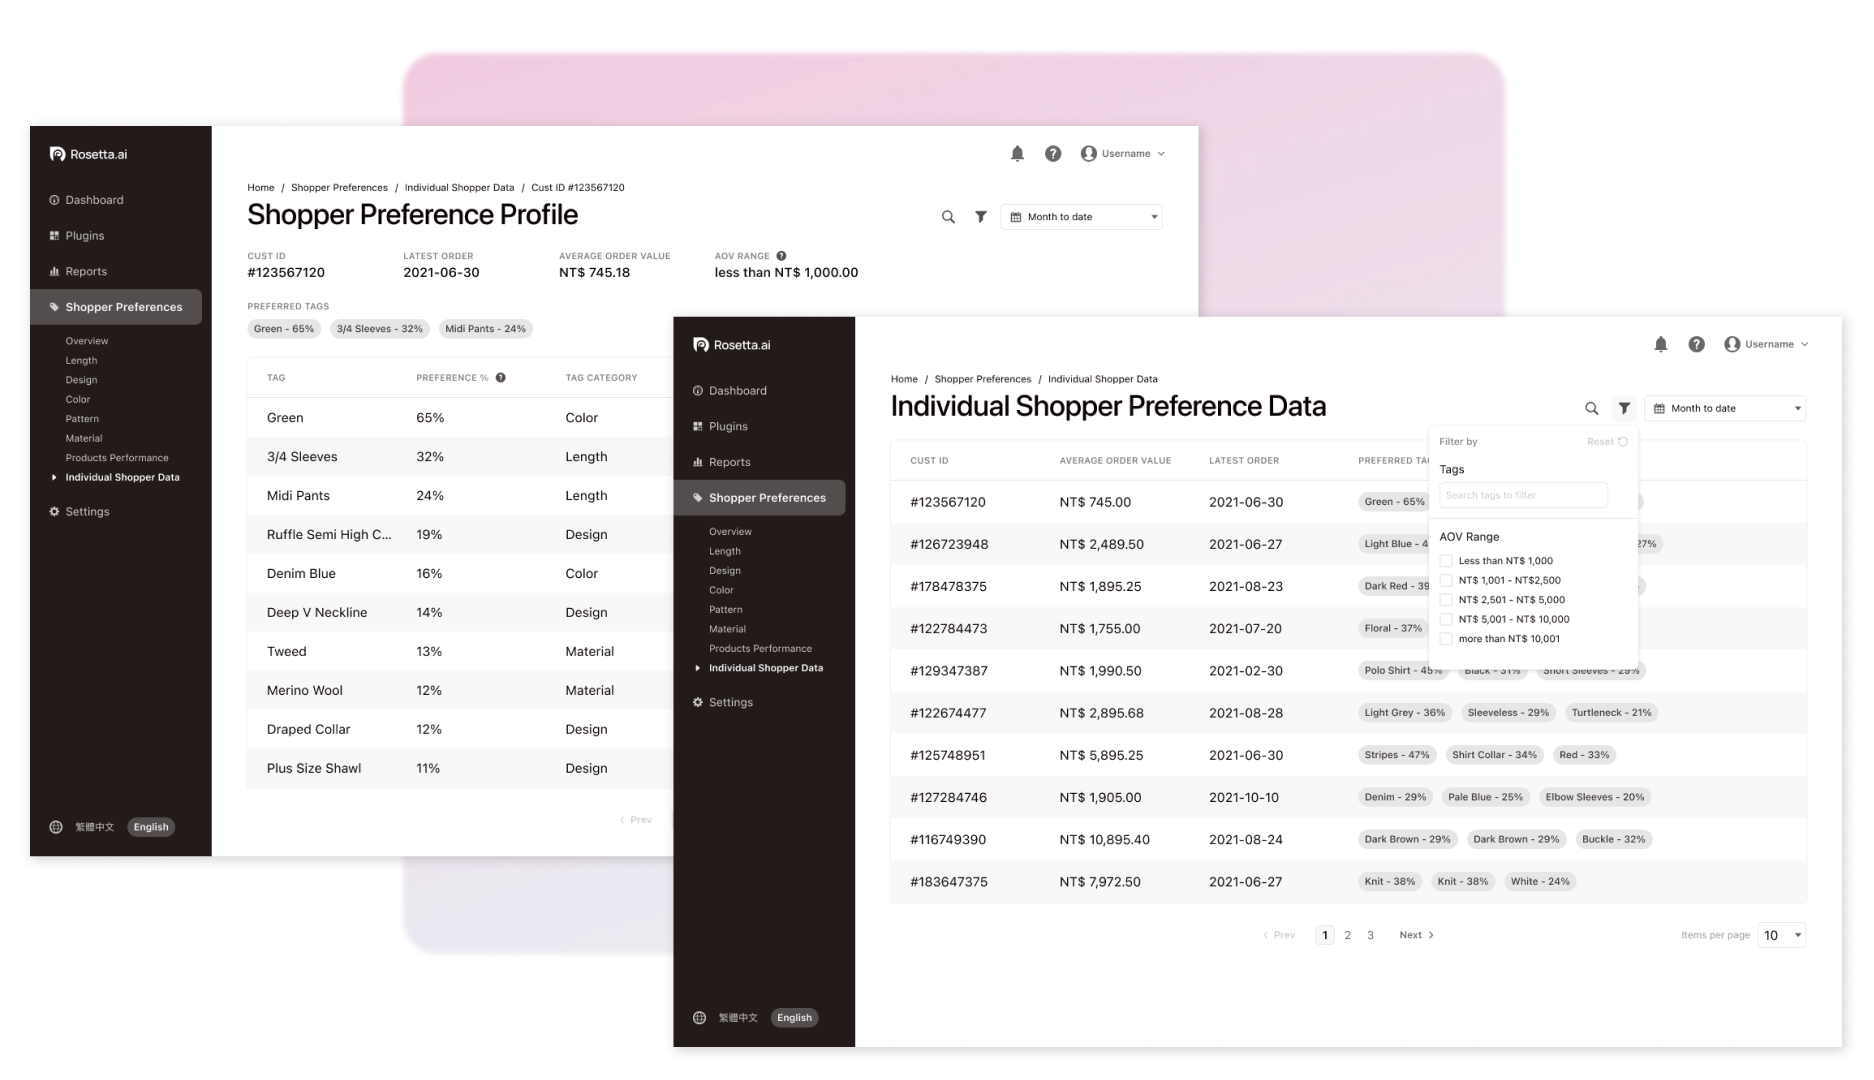 Rosetta AI Personalization Platform shopper preference profiles